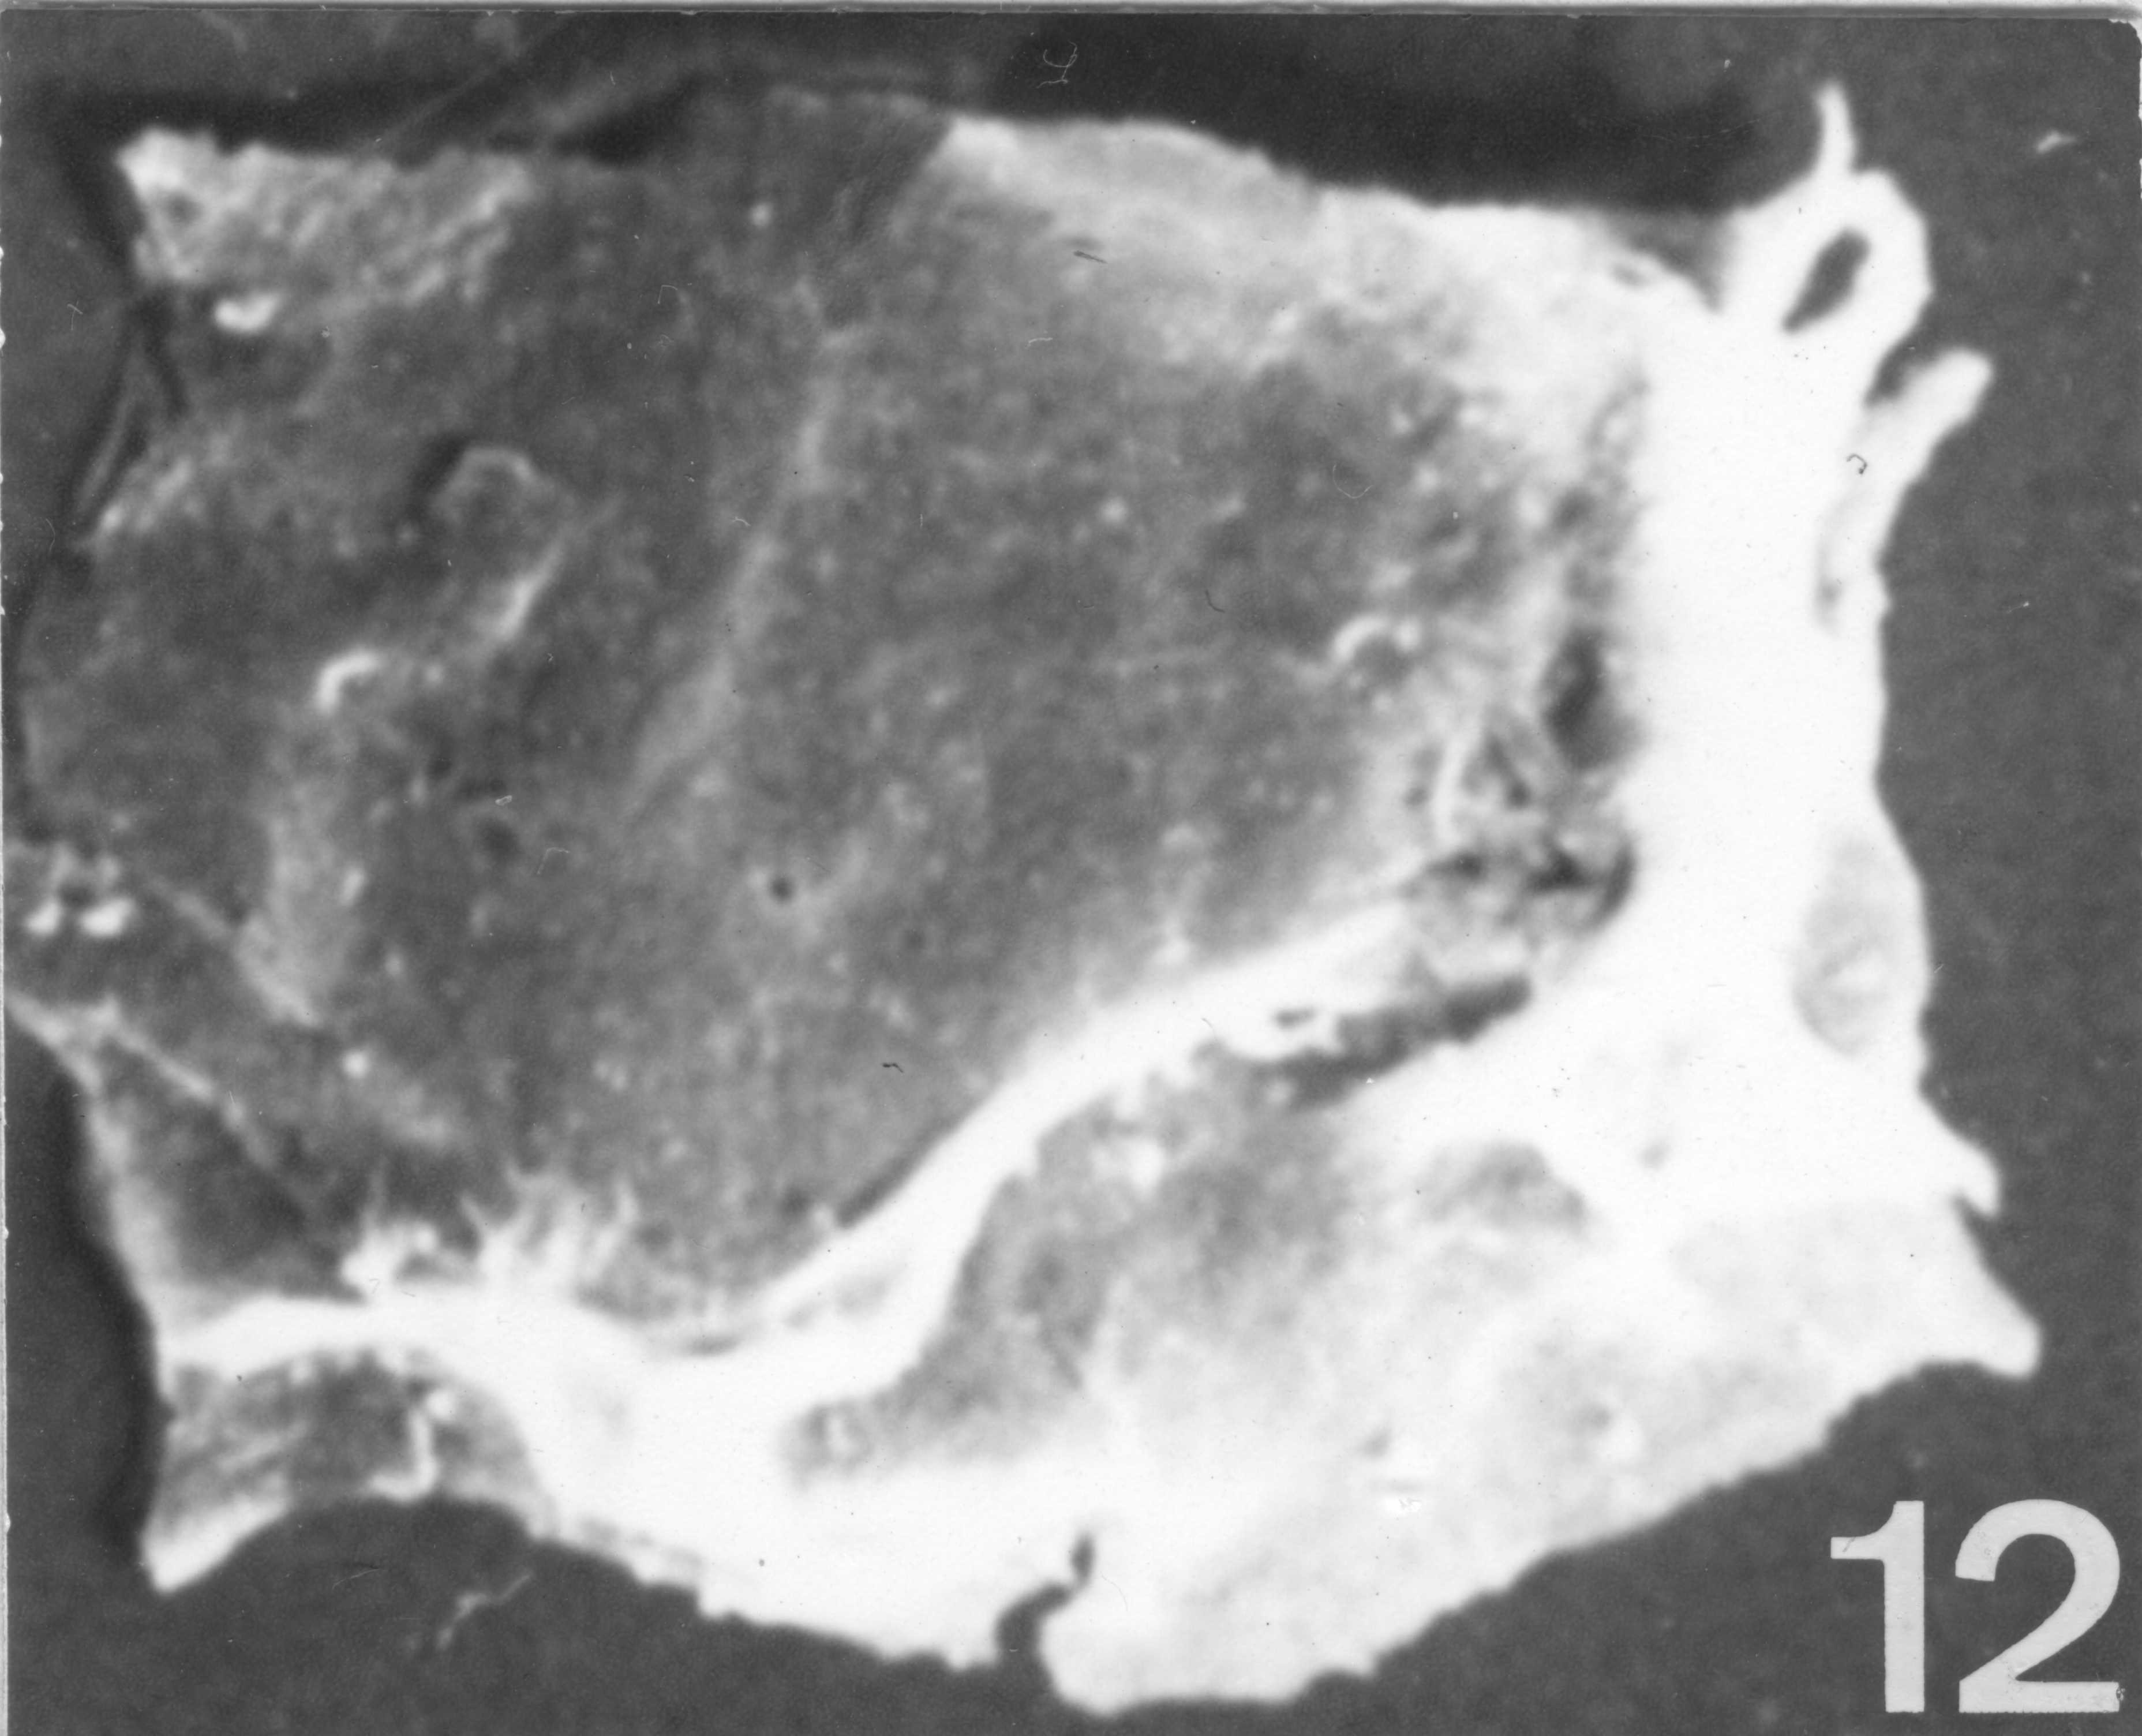 Fig. 12 - Acanthodiacrodium complanatum (Deunff, J., 1961) n. comb. CHE-18. I. R. Sc. N. B. N° b535. 